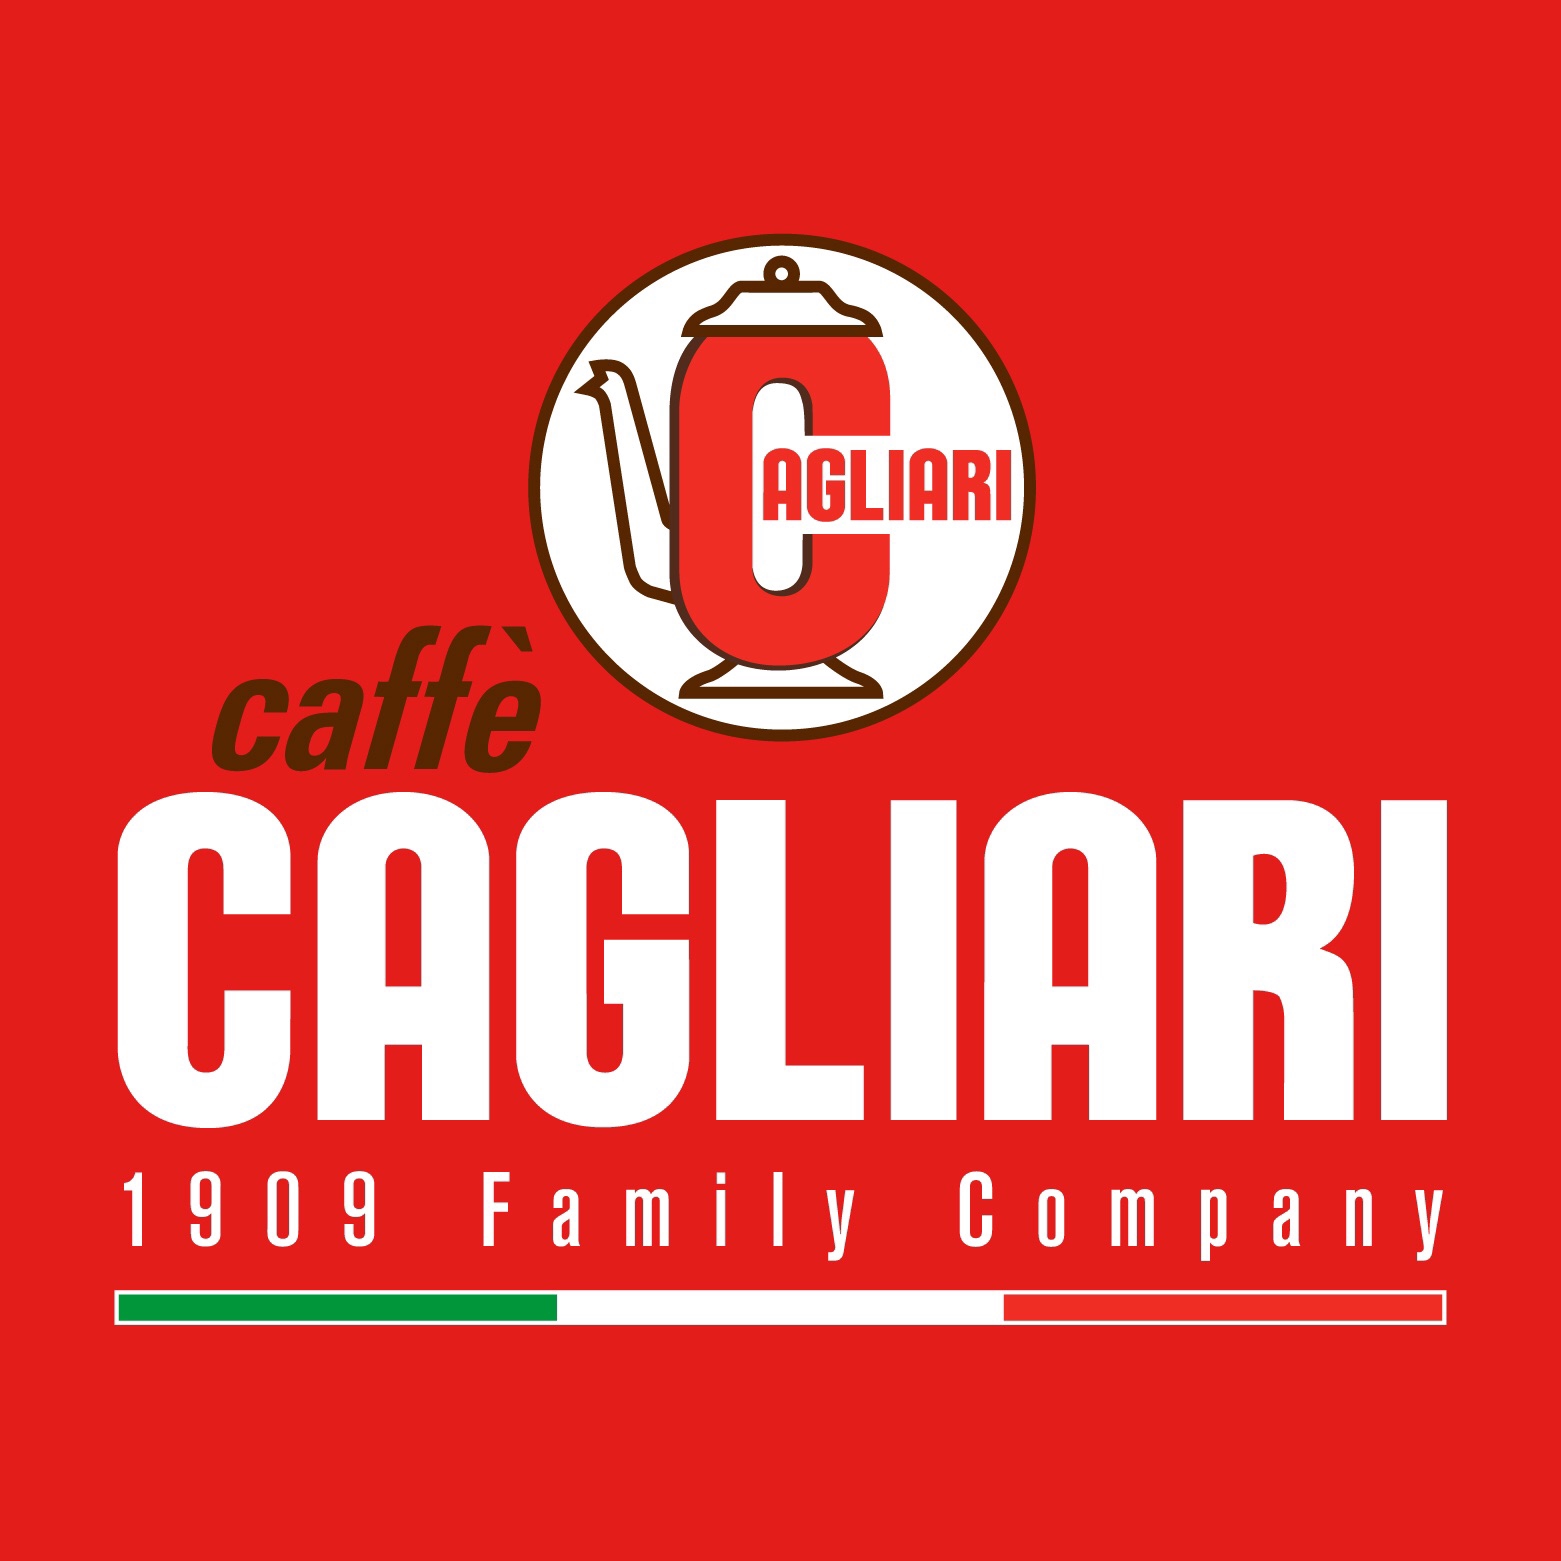 CAGLIARI カフェ・カリアリ | カフェダイニング サルビア